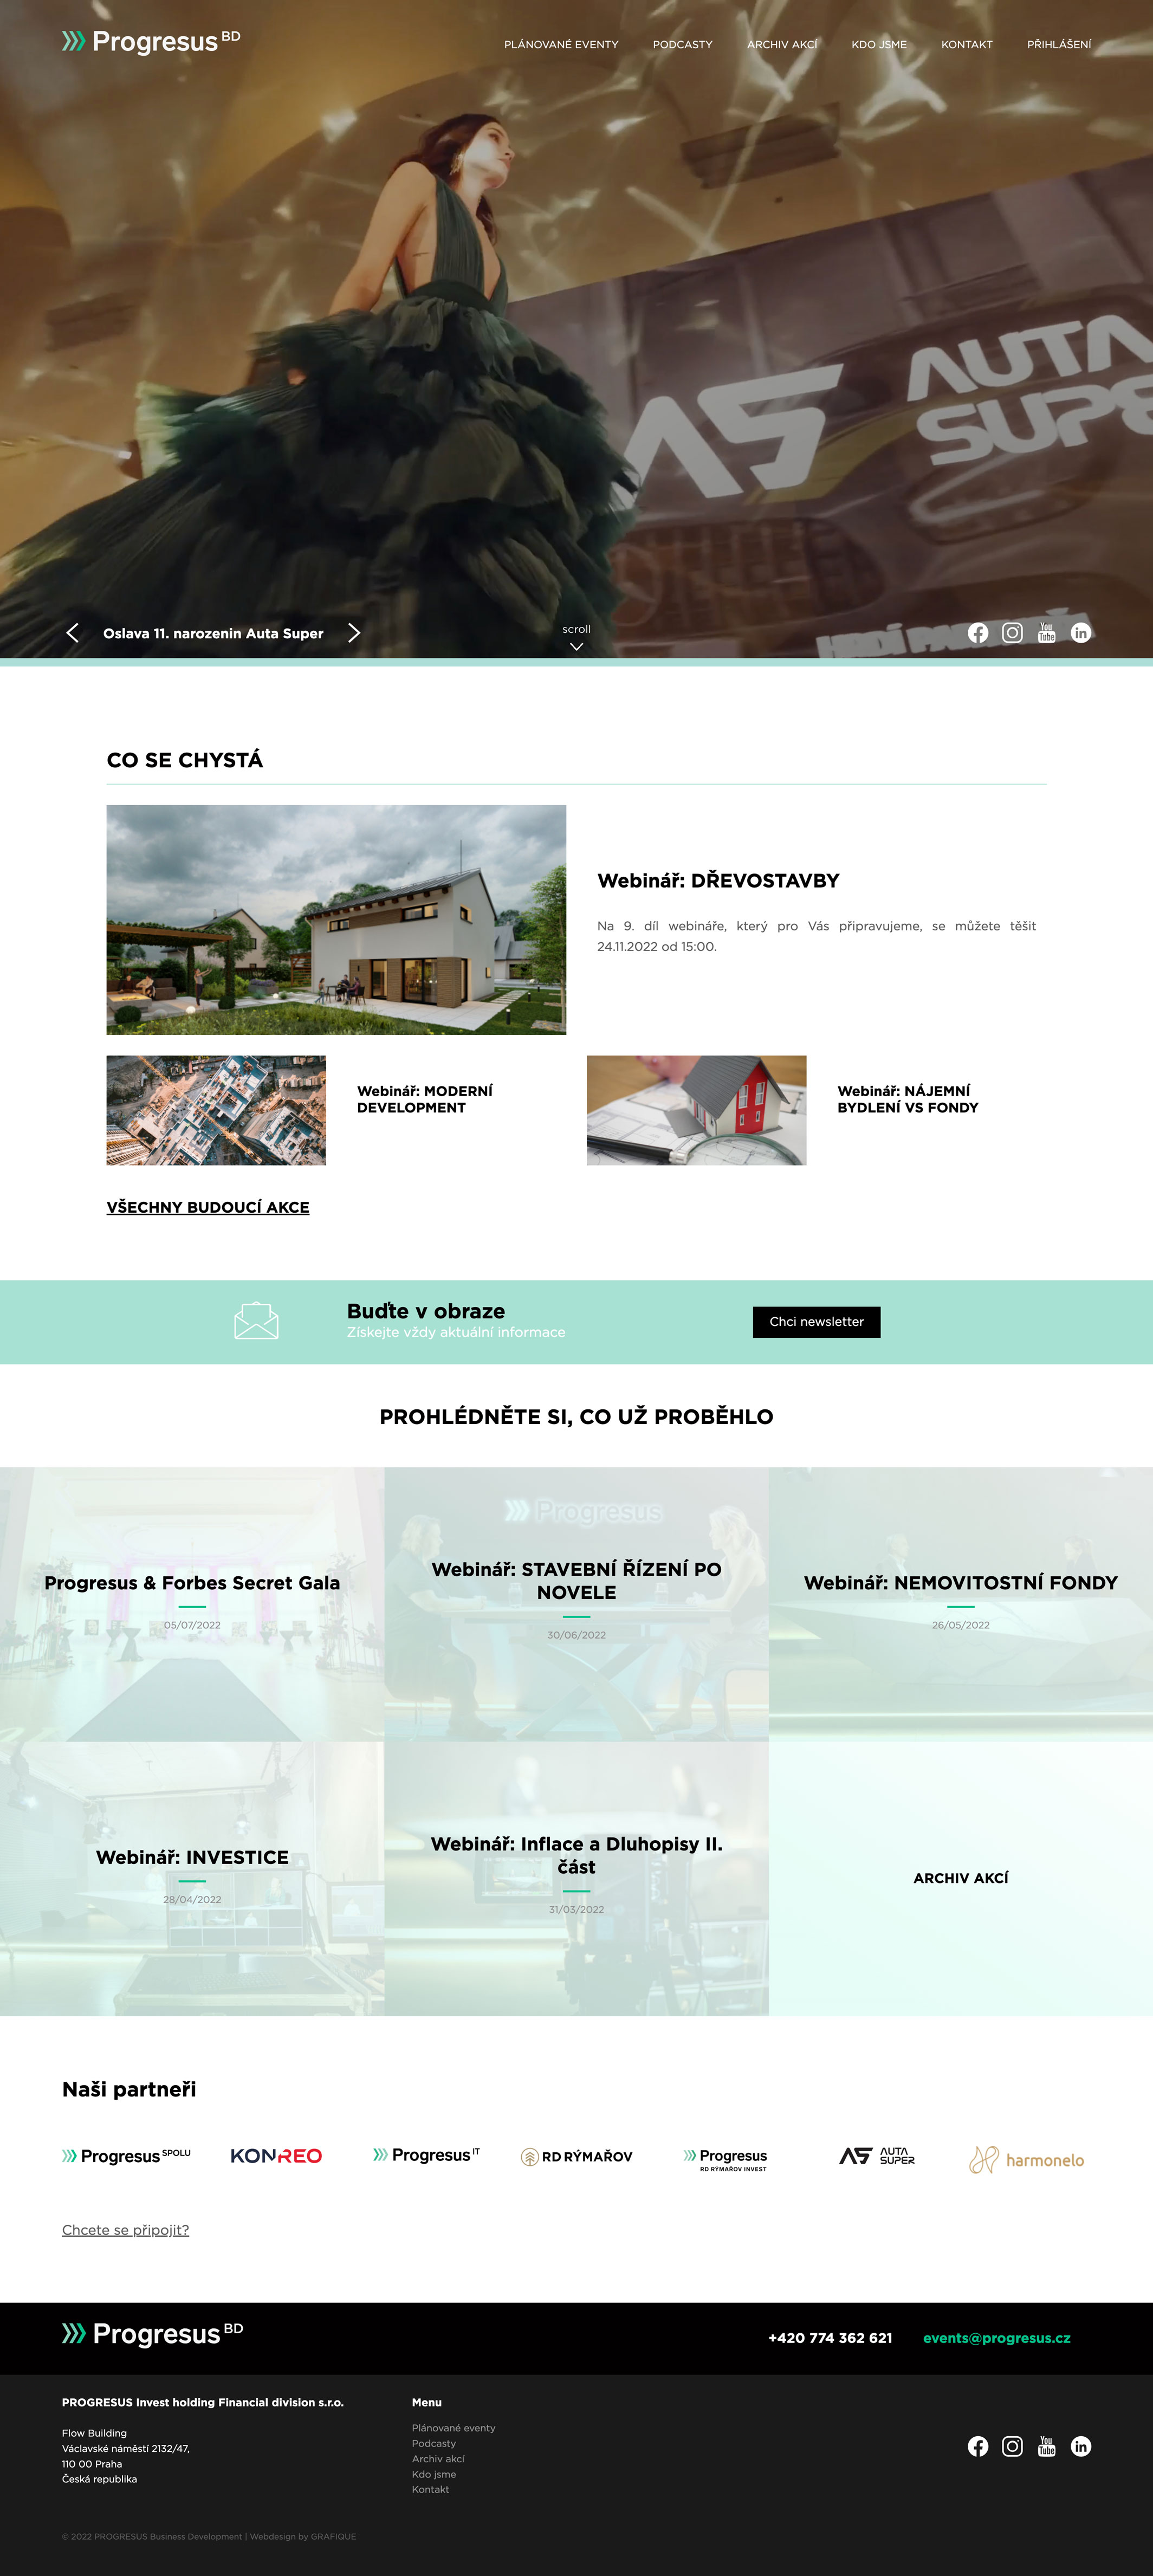 PROGRESUS Business Development - tvorba www stránek, Web design